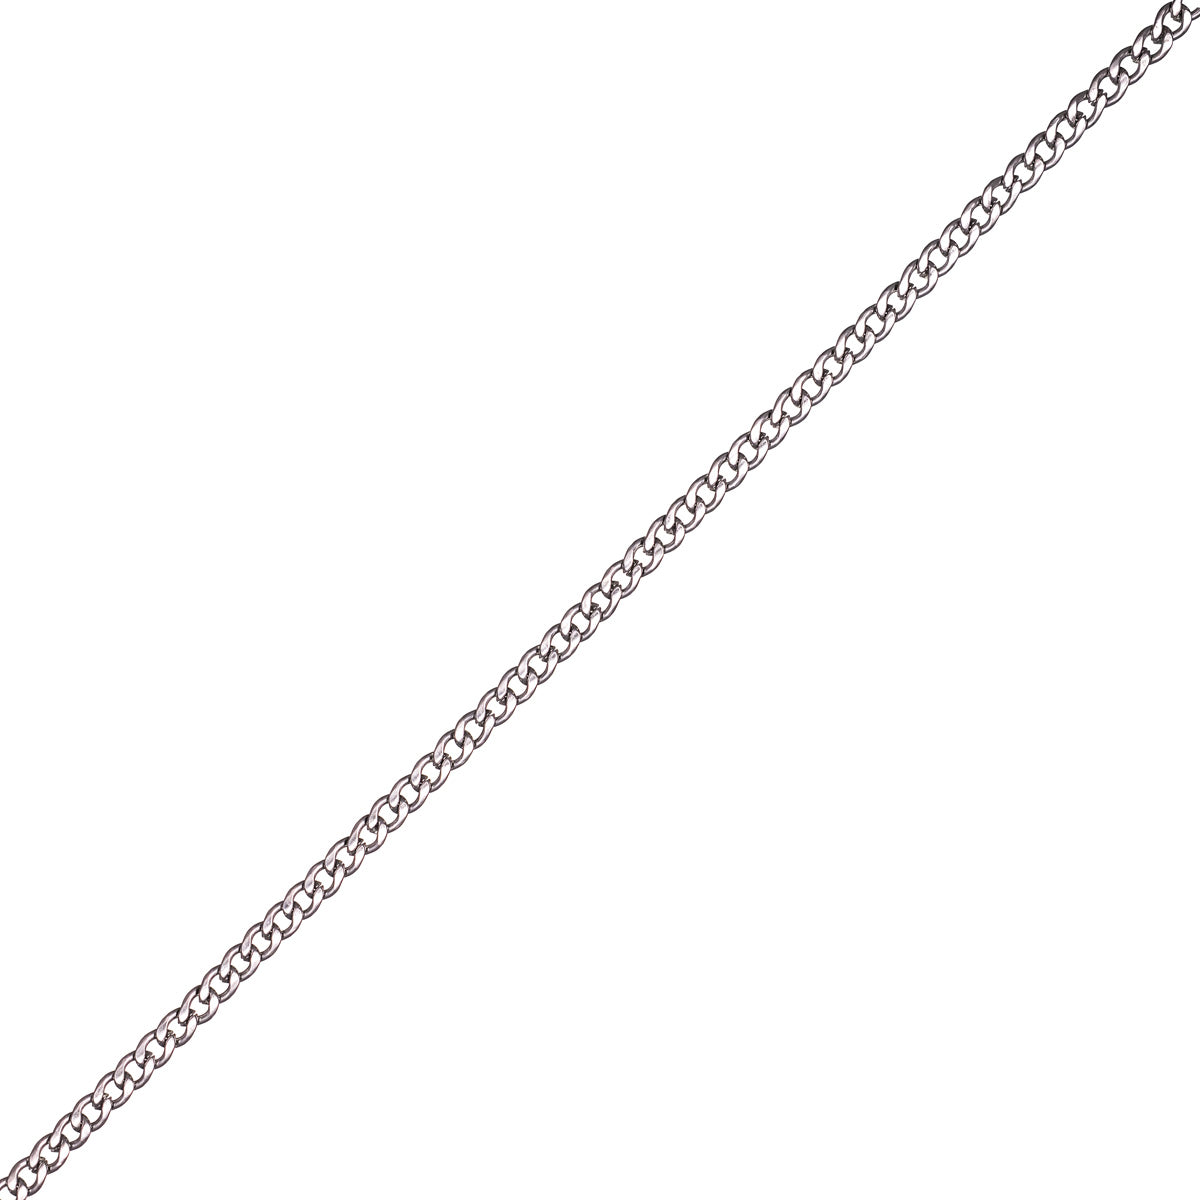 Thin flat armor chain steel neck chain 4mm 56cm